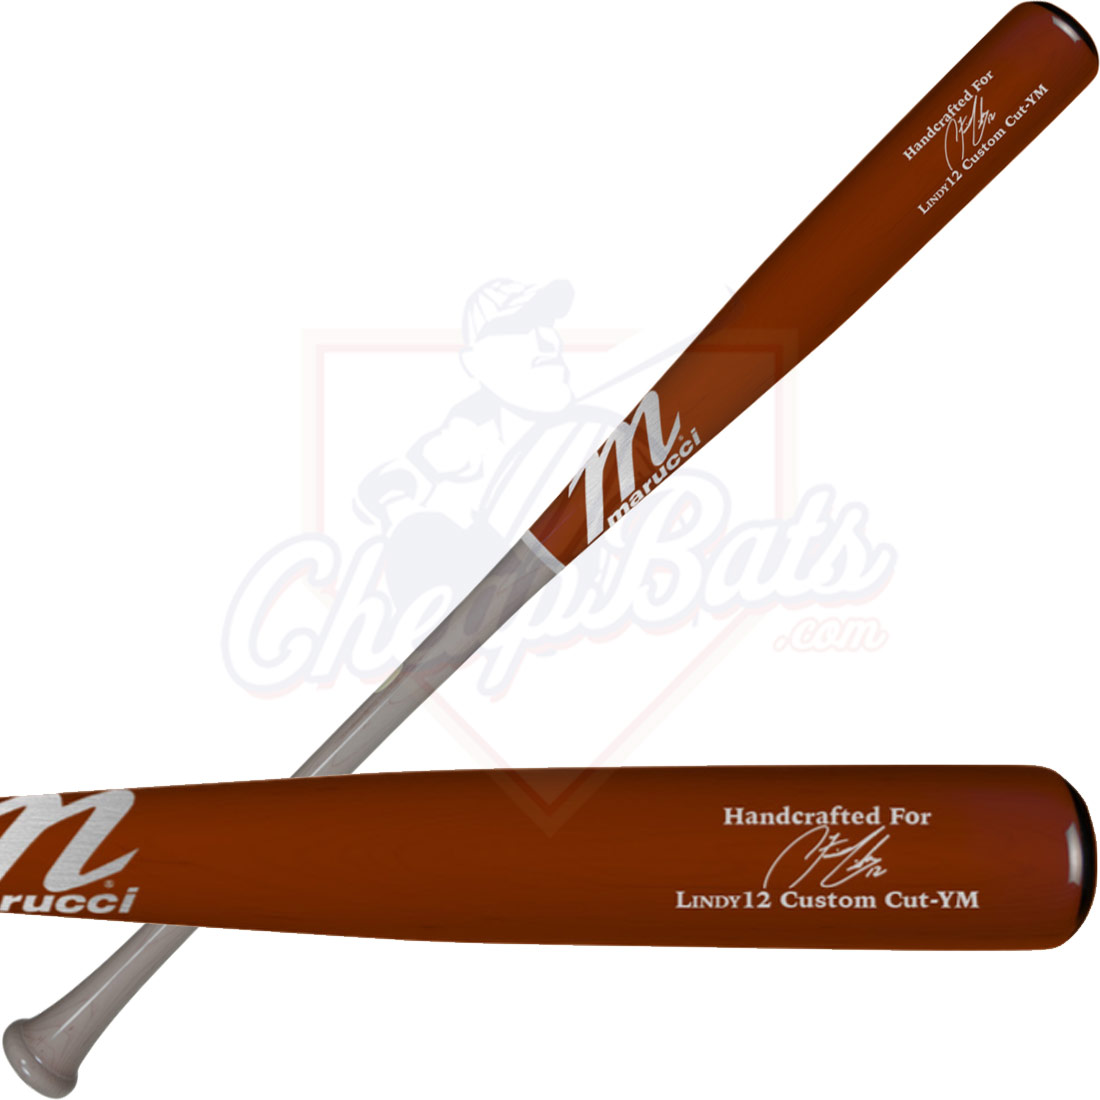 Marucci Francisco Lindor Pro Exclusive Youth Maple Wood Baseball Bat MYVE4LINDY12-SM/BO